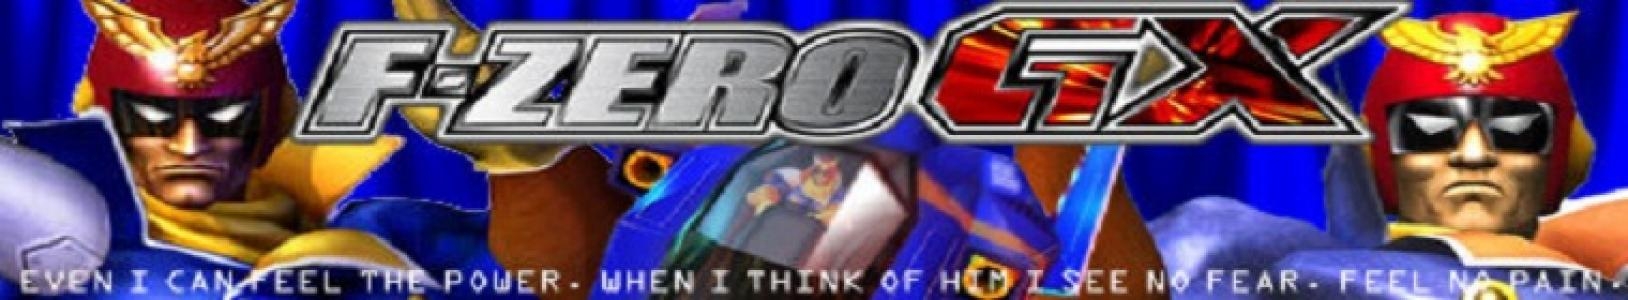 F-Zero GX banner